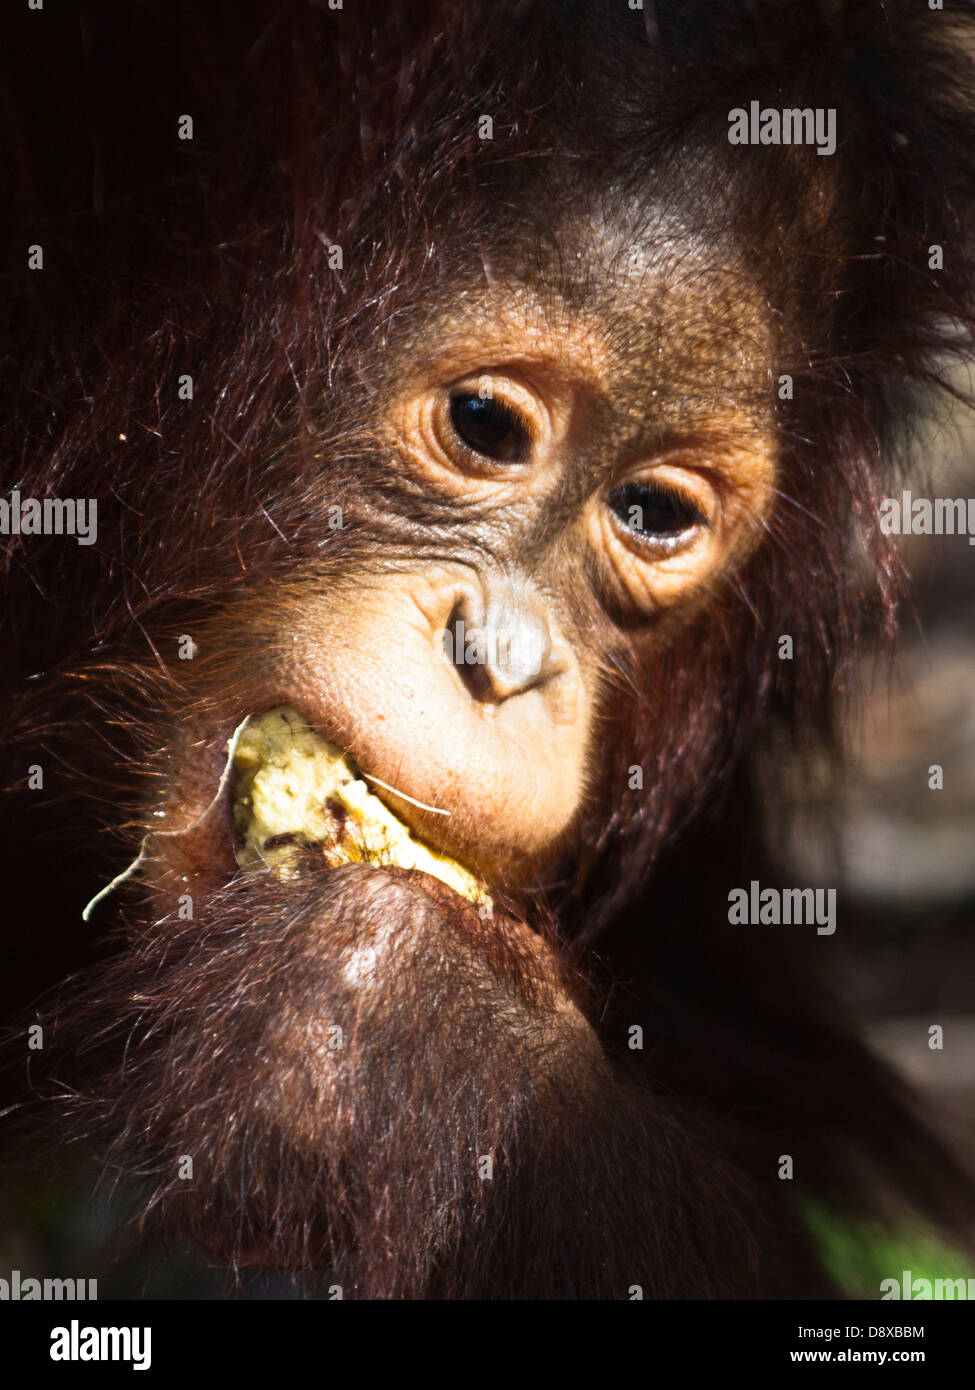 Orangutan cub eating closeup Stock Photo